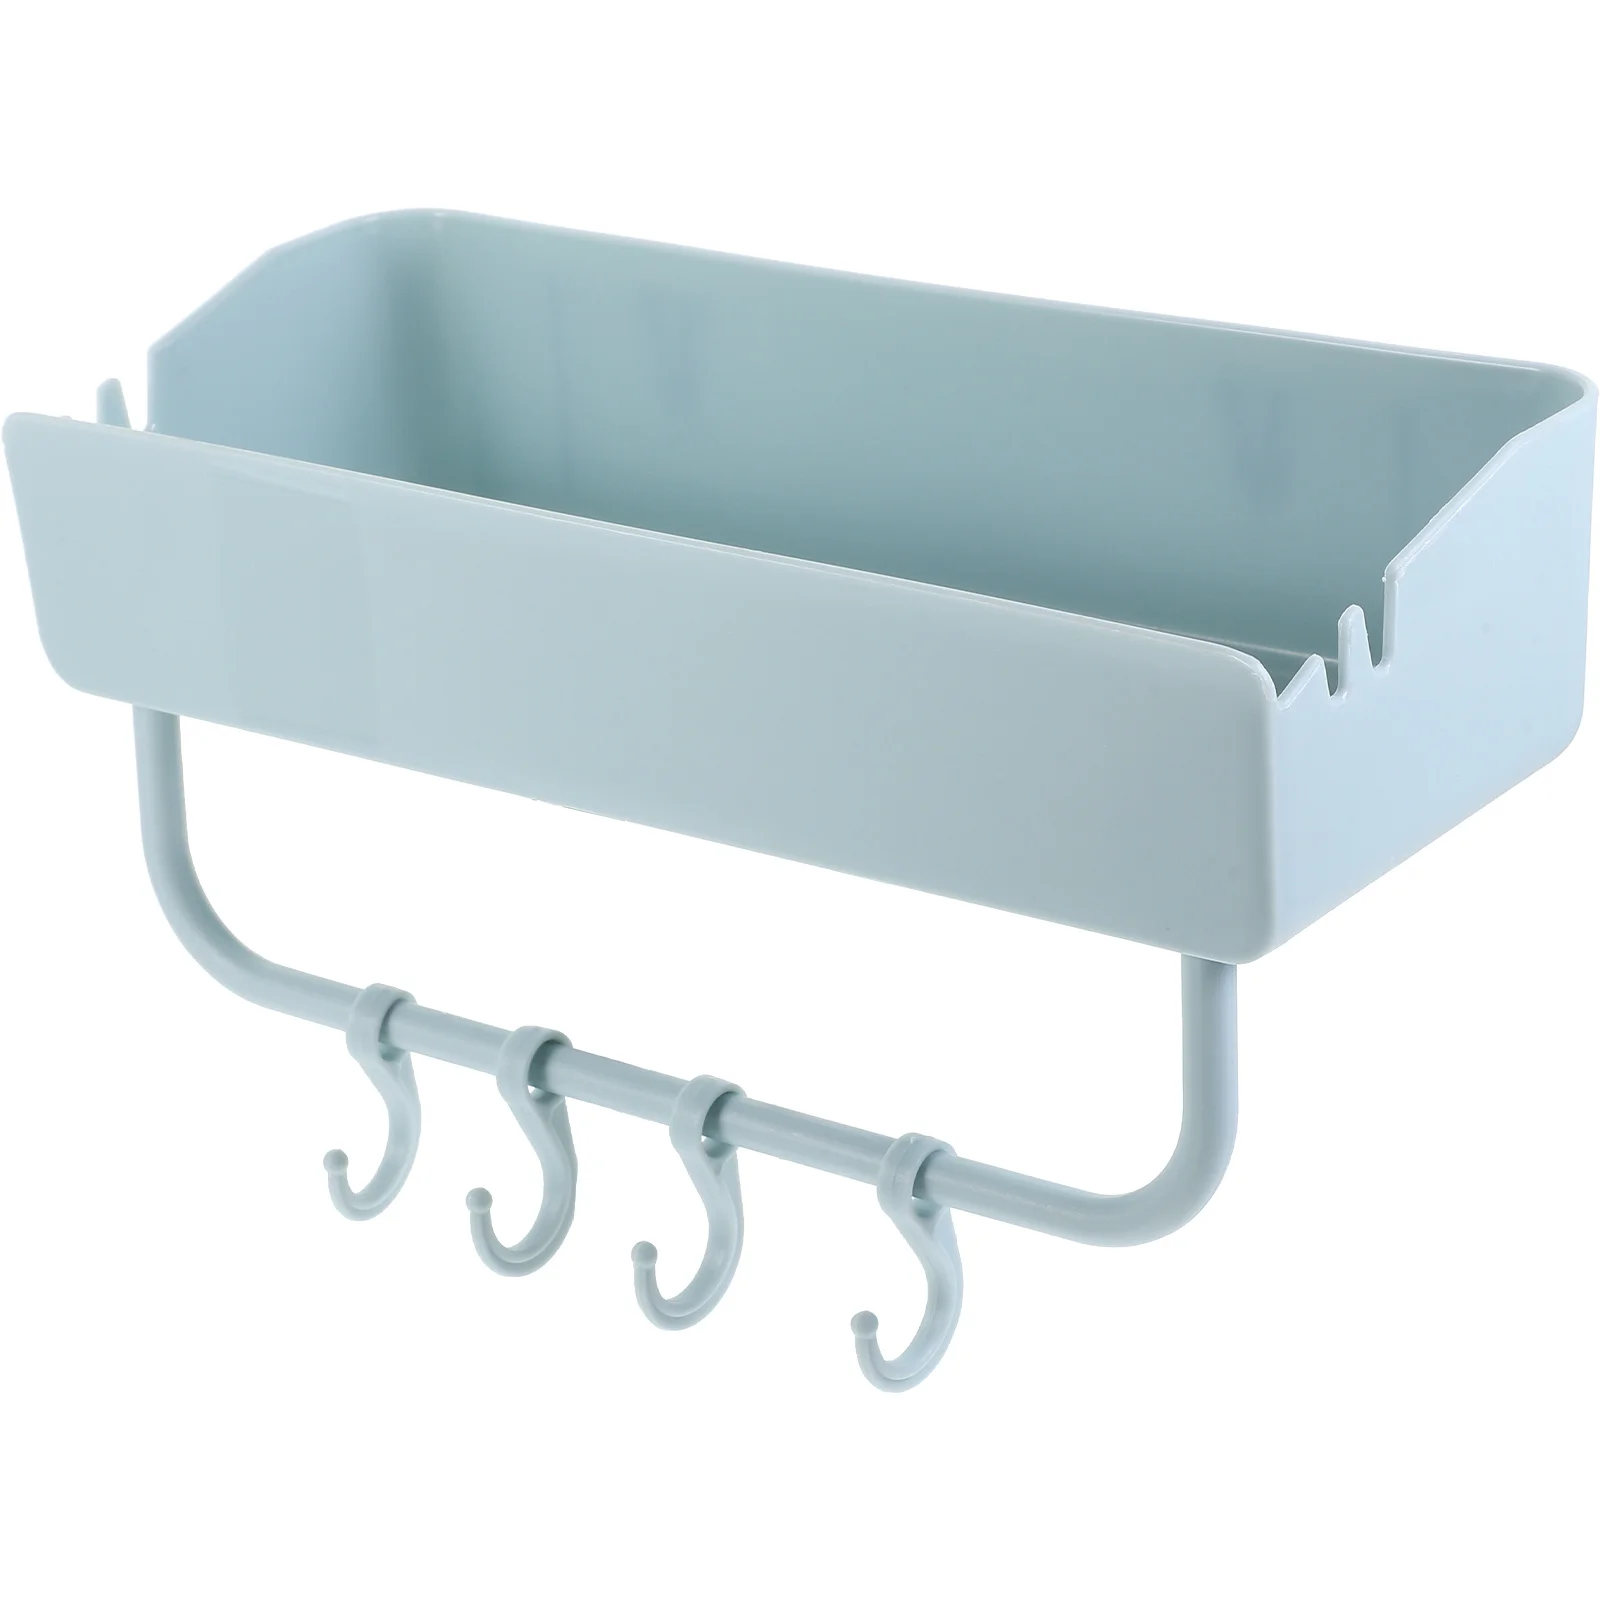 

Towel Rails Bathroom Supply Storage Rack Shelf Wall Mounted Organizer Shower Hook Hanging Basket Convenient